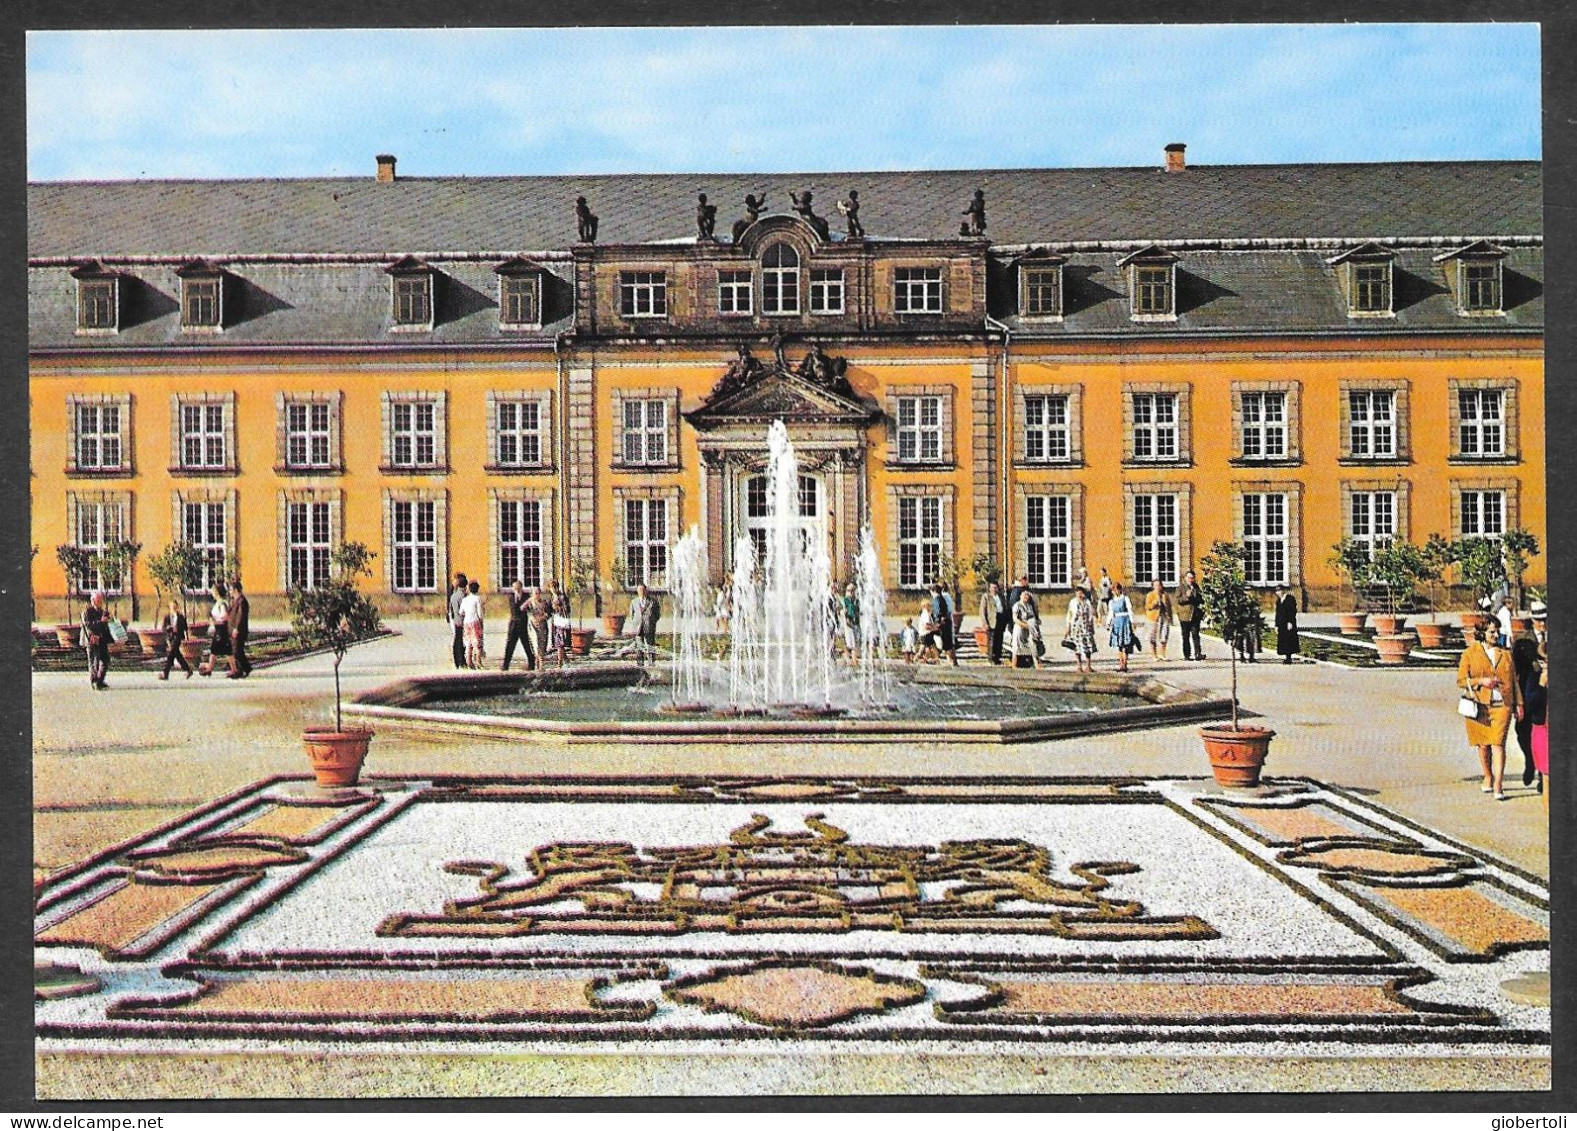 Germania/Germany/Allemagne: Castello, Castle, Château - Castelli